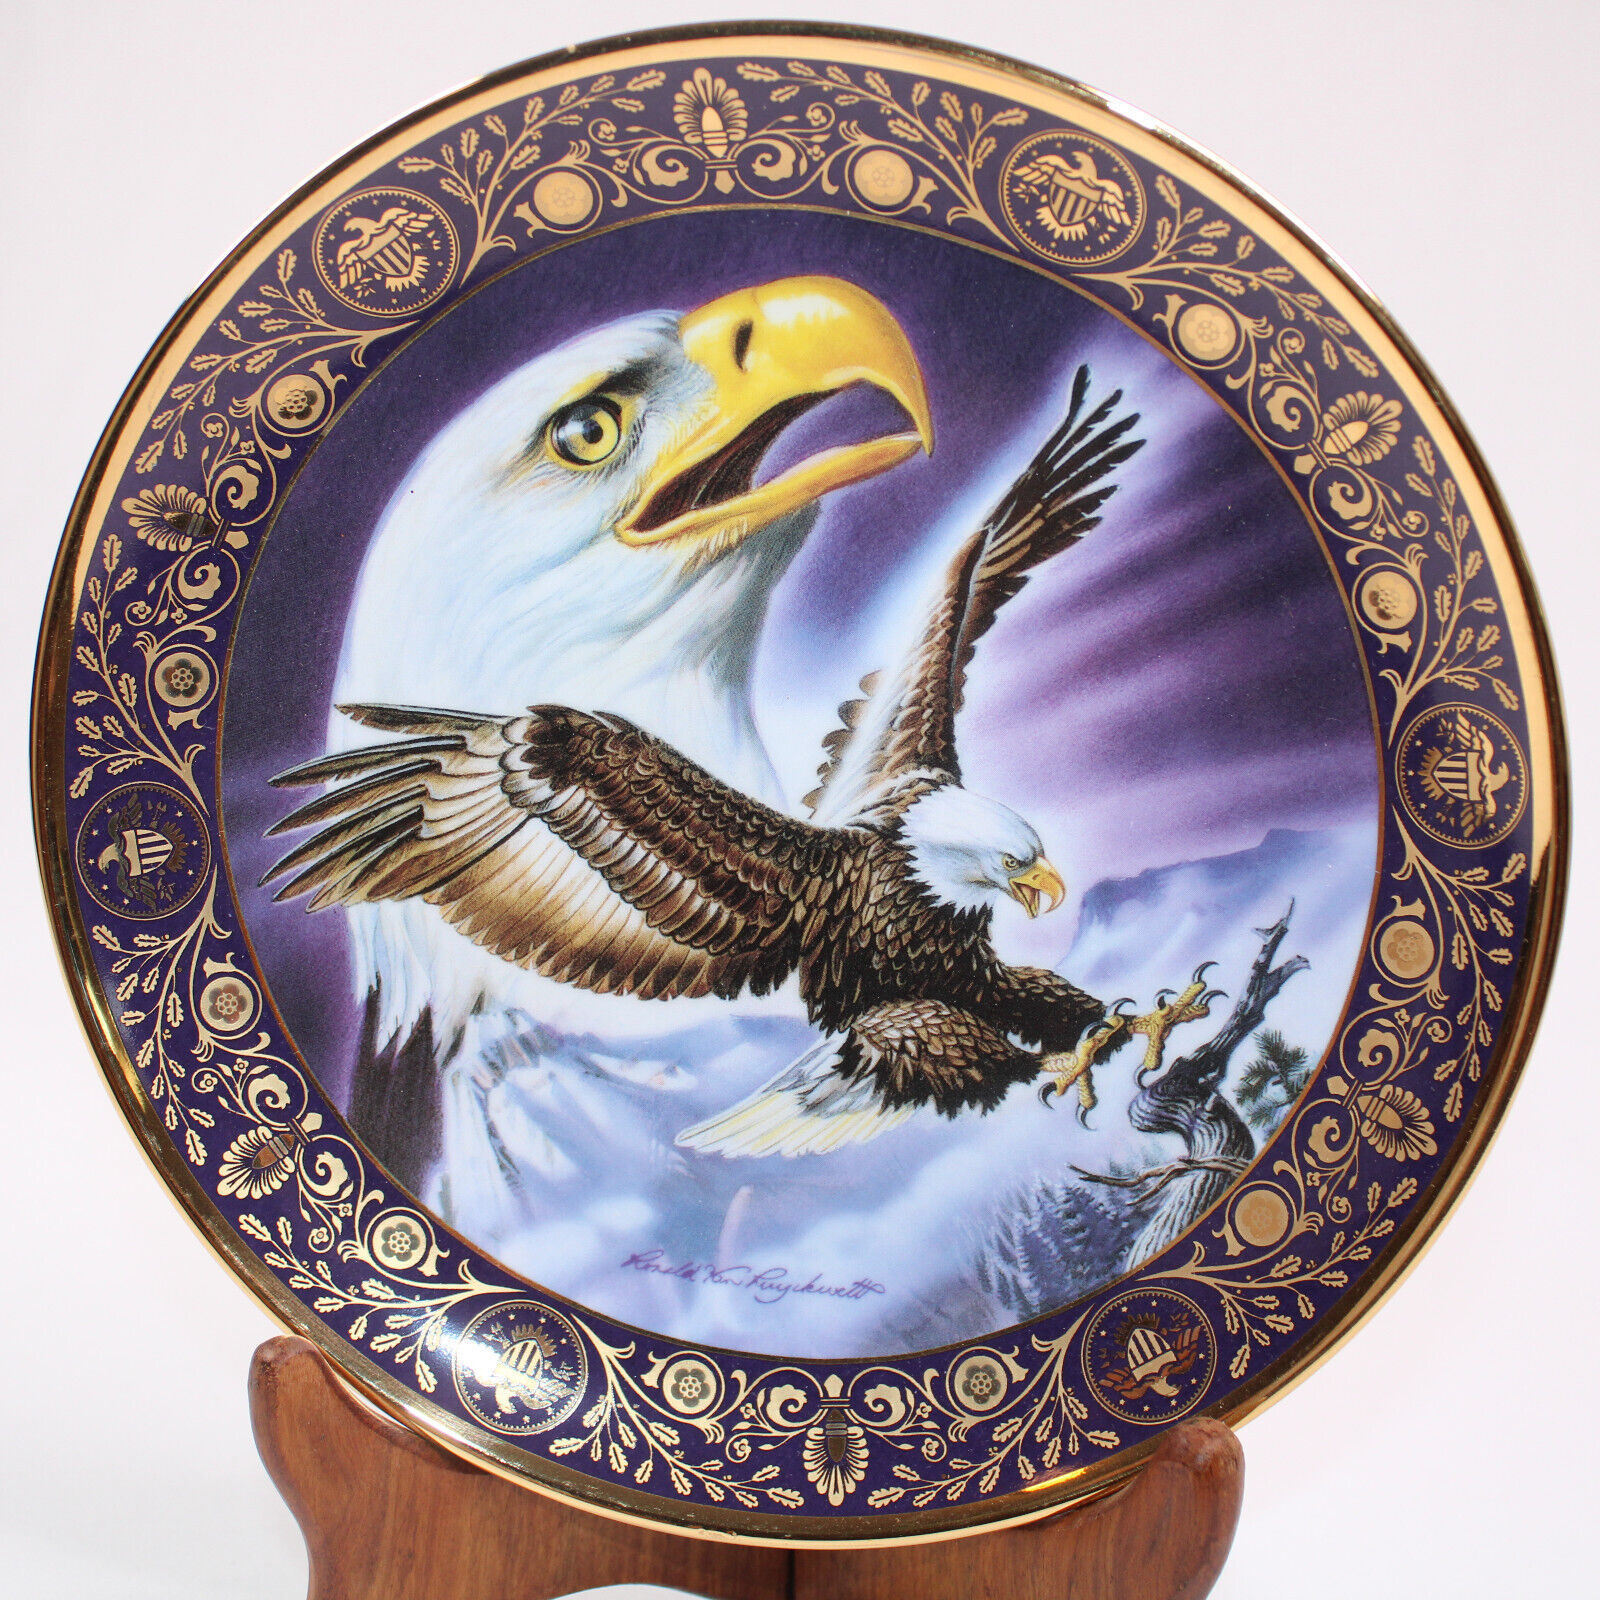 Franklin Mint Decorative Porcelain Plate "Majestic Freedom" Royal Doulton China - $14.98